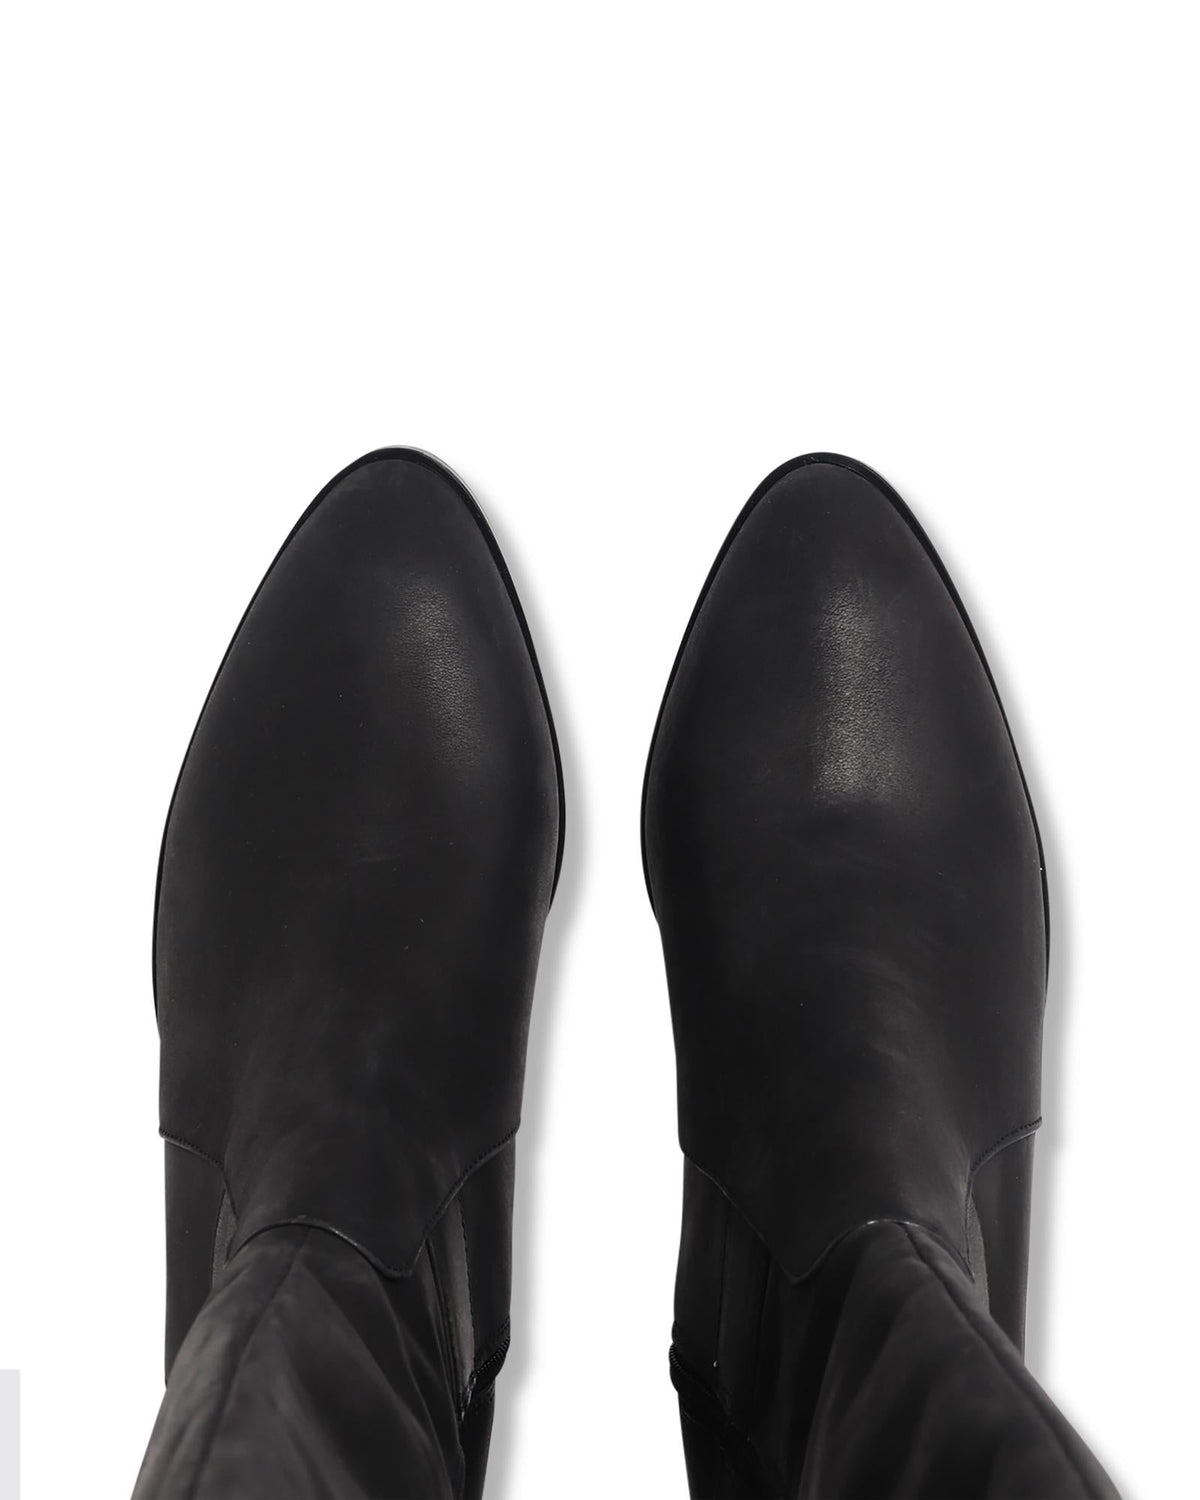 Nyla Black 6cm Knee High Boot - Sare StoreNude FootwearBoots